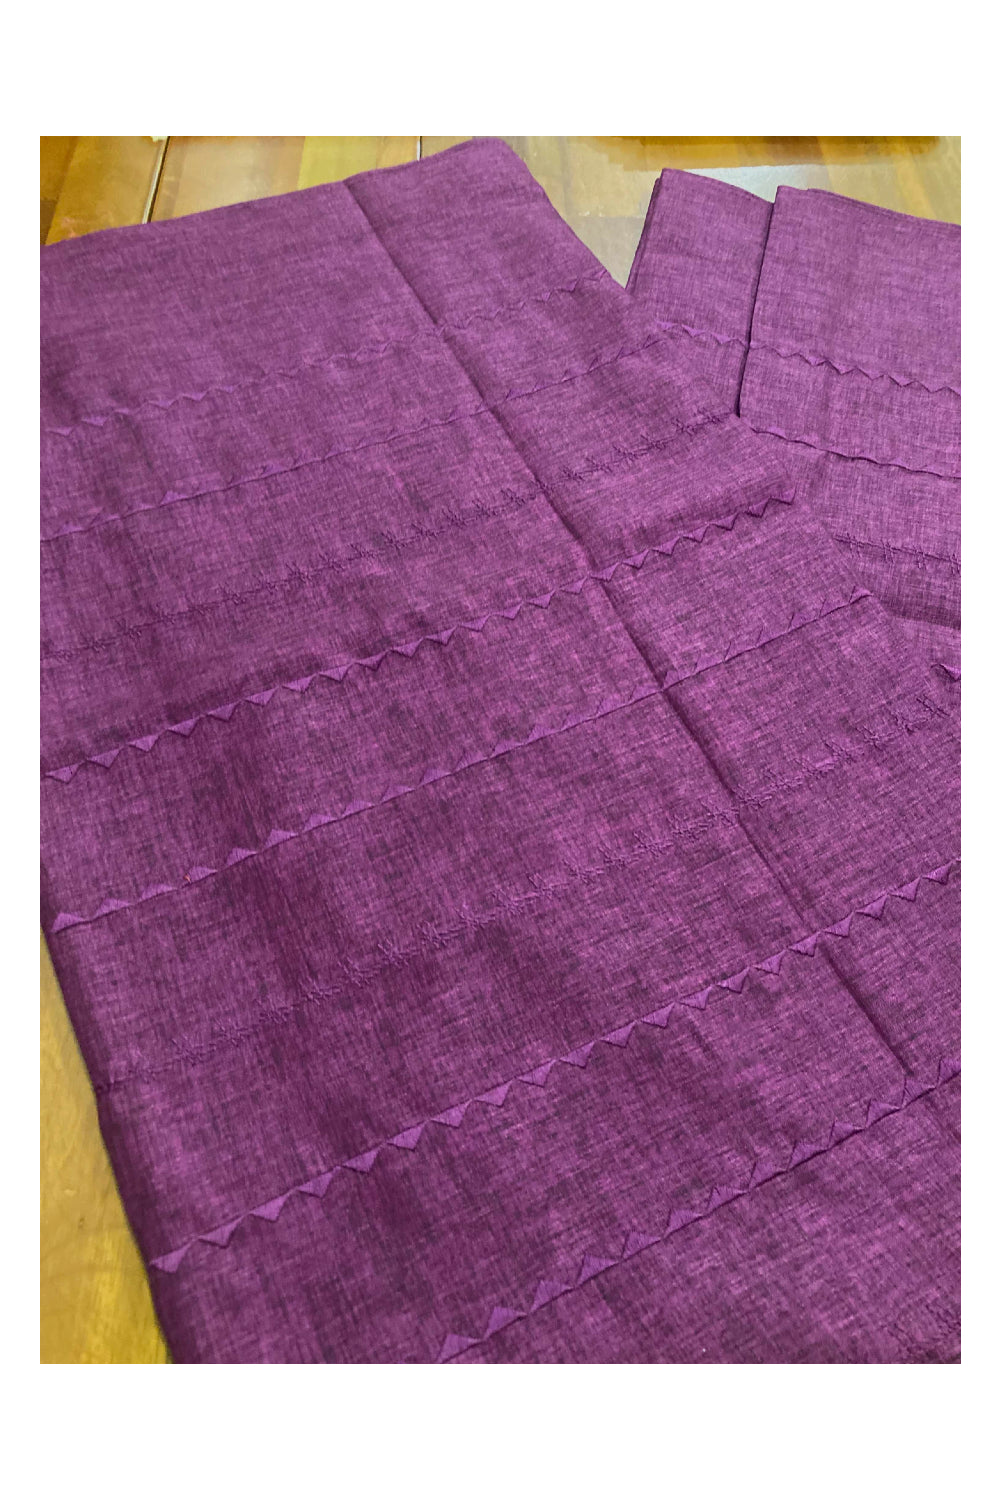 Southloom™ Semi Jute Churidar Salwar Suit Material in Dark Magenta with Thread Work